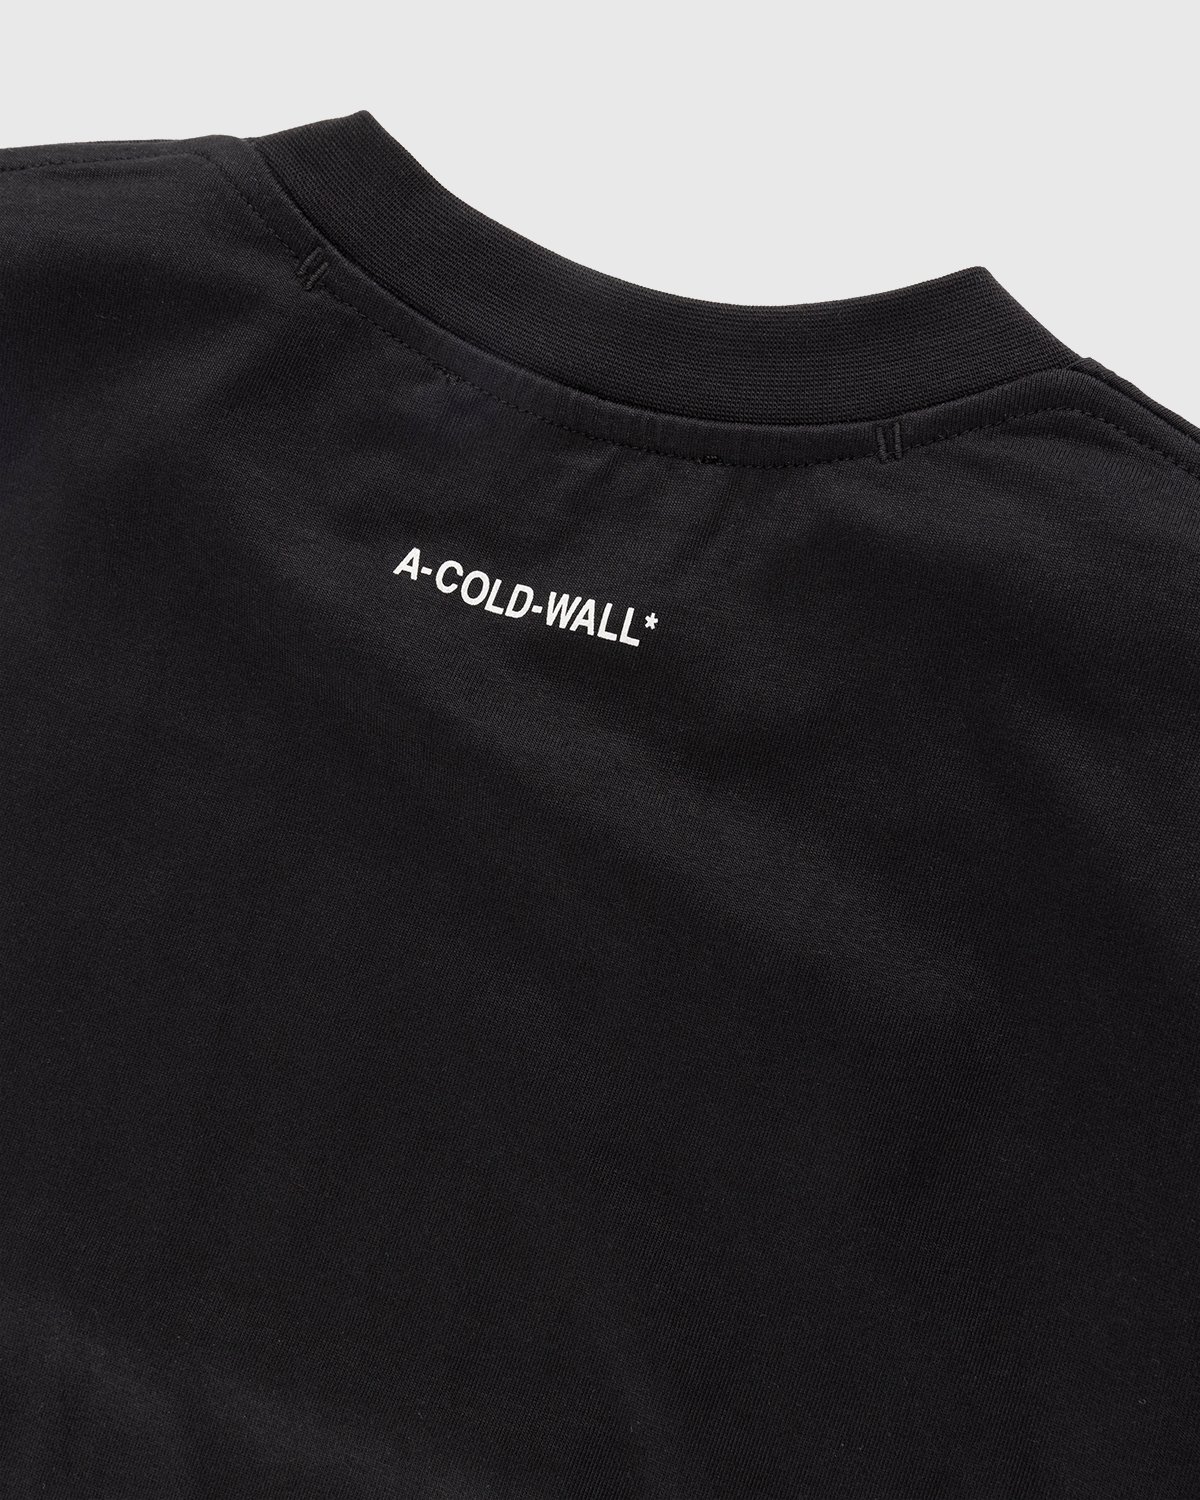 A-Cold-Wall* - Prose T-Shirt Black - Clothing - Black - Image 3